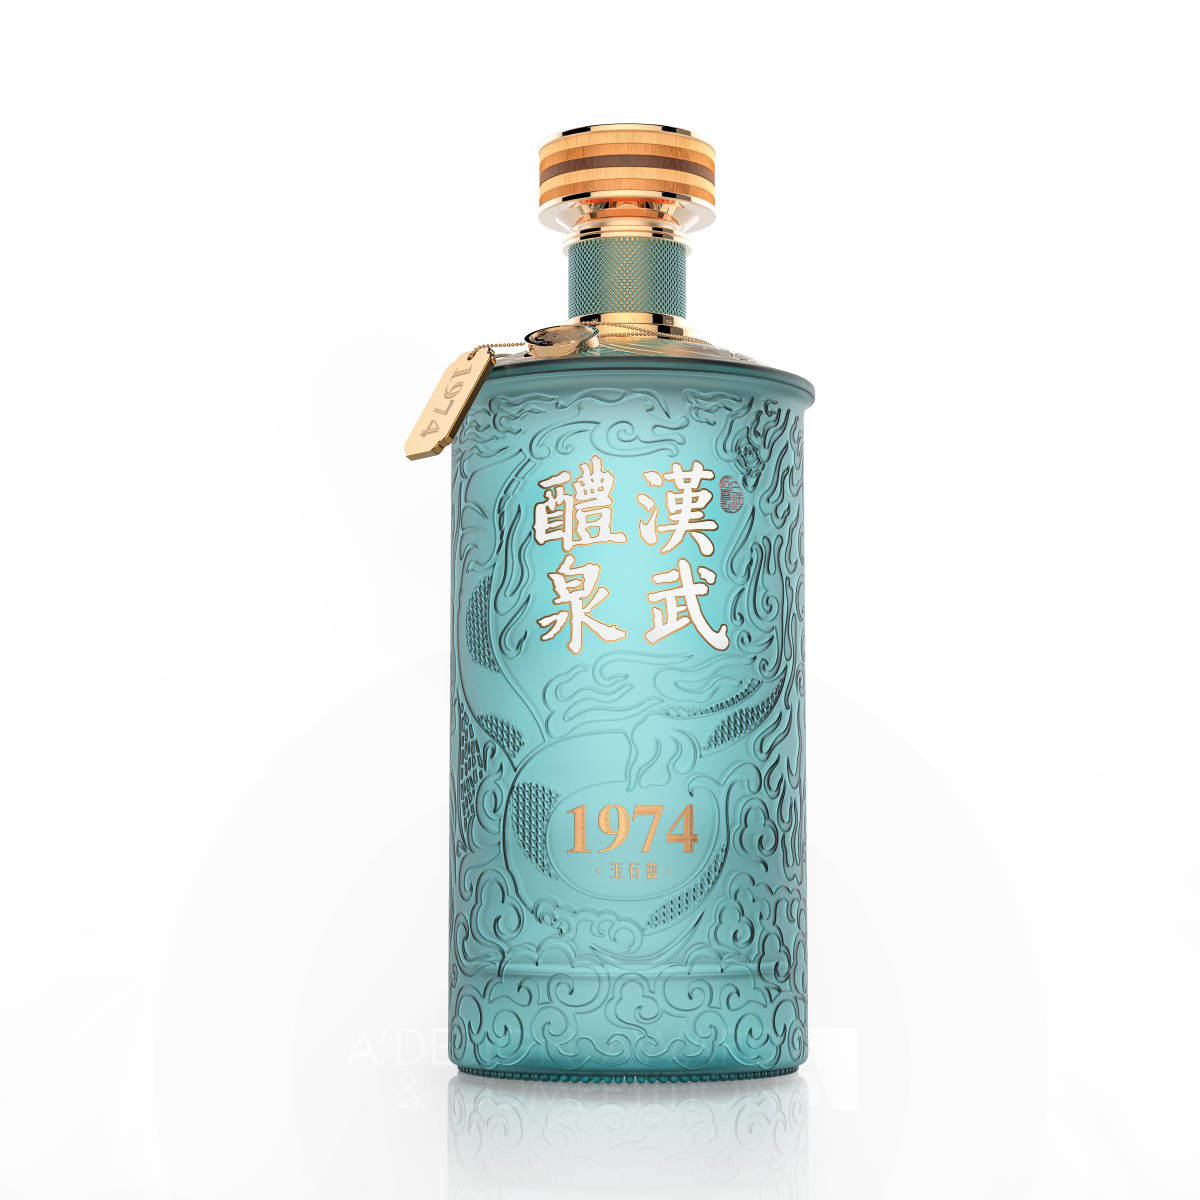 Wen Liu wins Bronze at the prestigious A' Packaging Design Award with Hanwu Liquan 1974 Beverage.